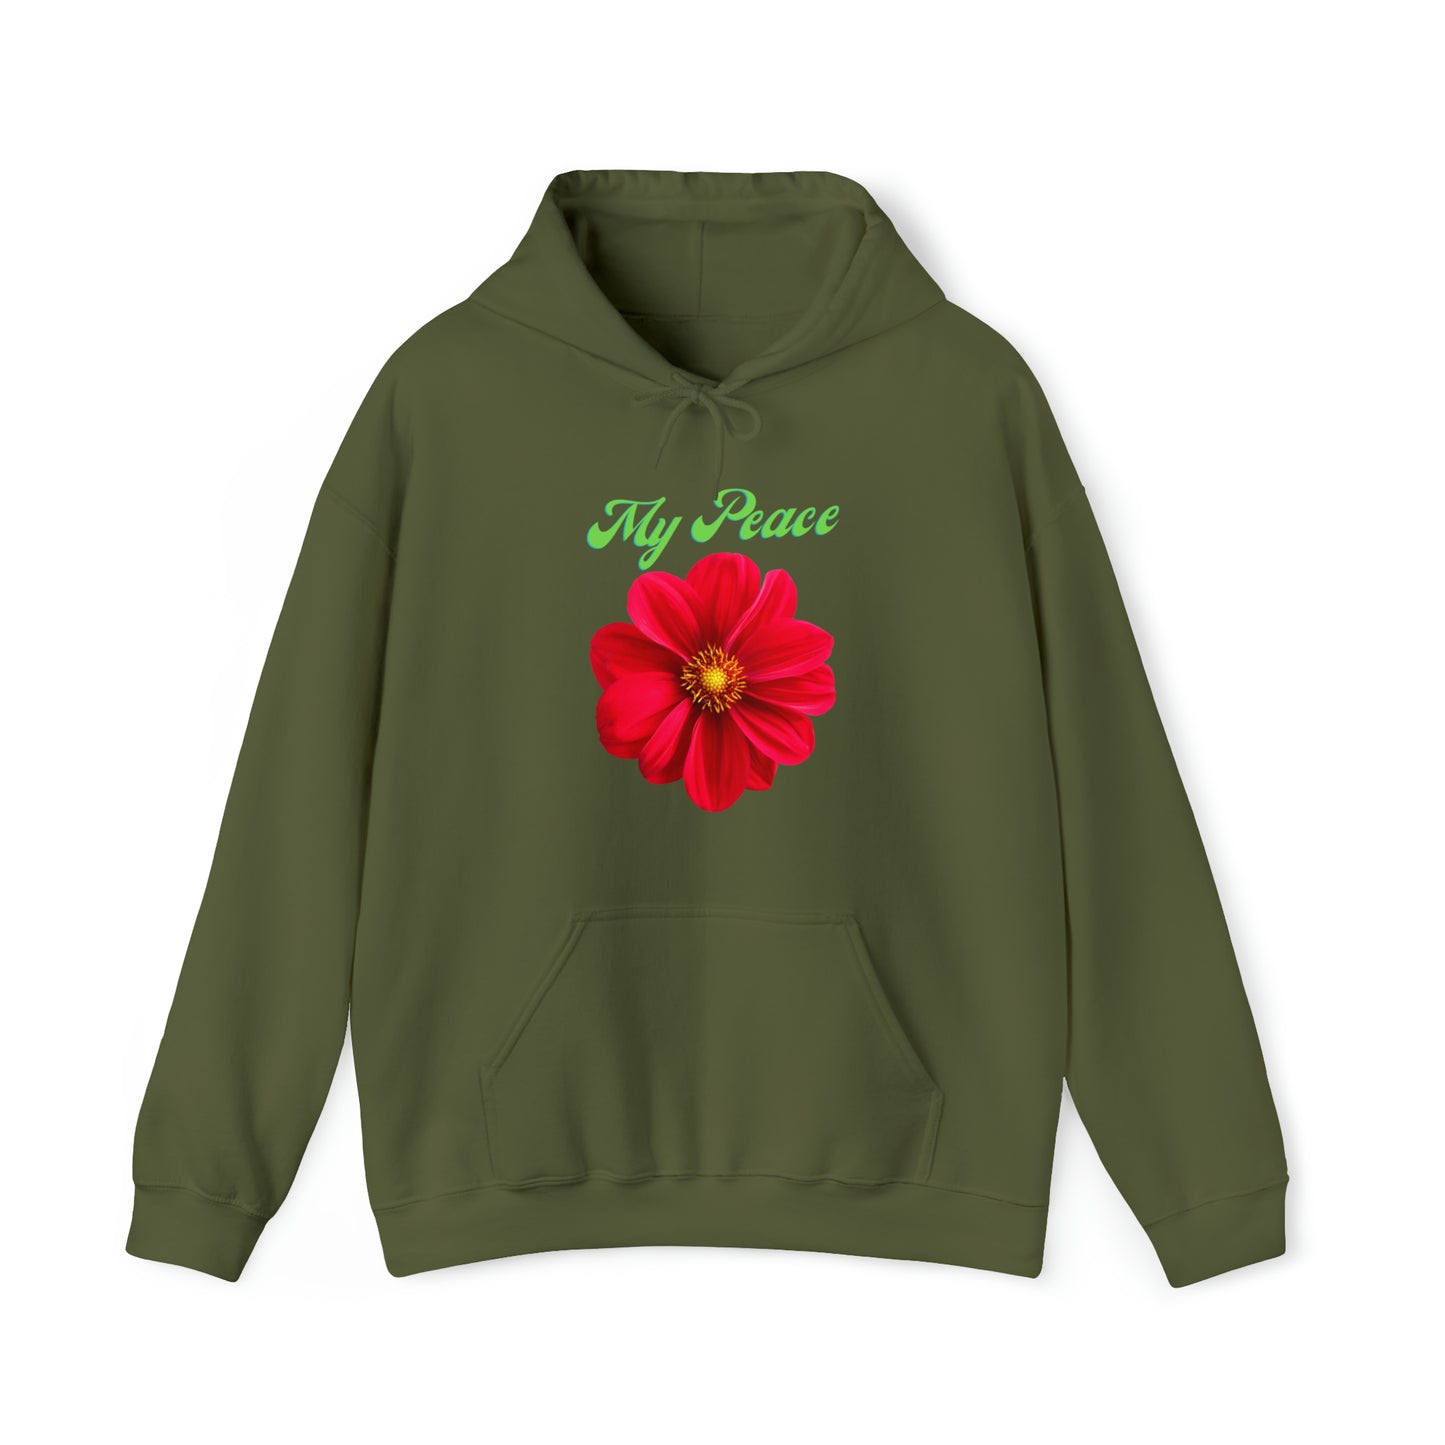 Beautiful red flower statement hoodie